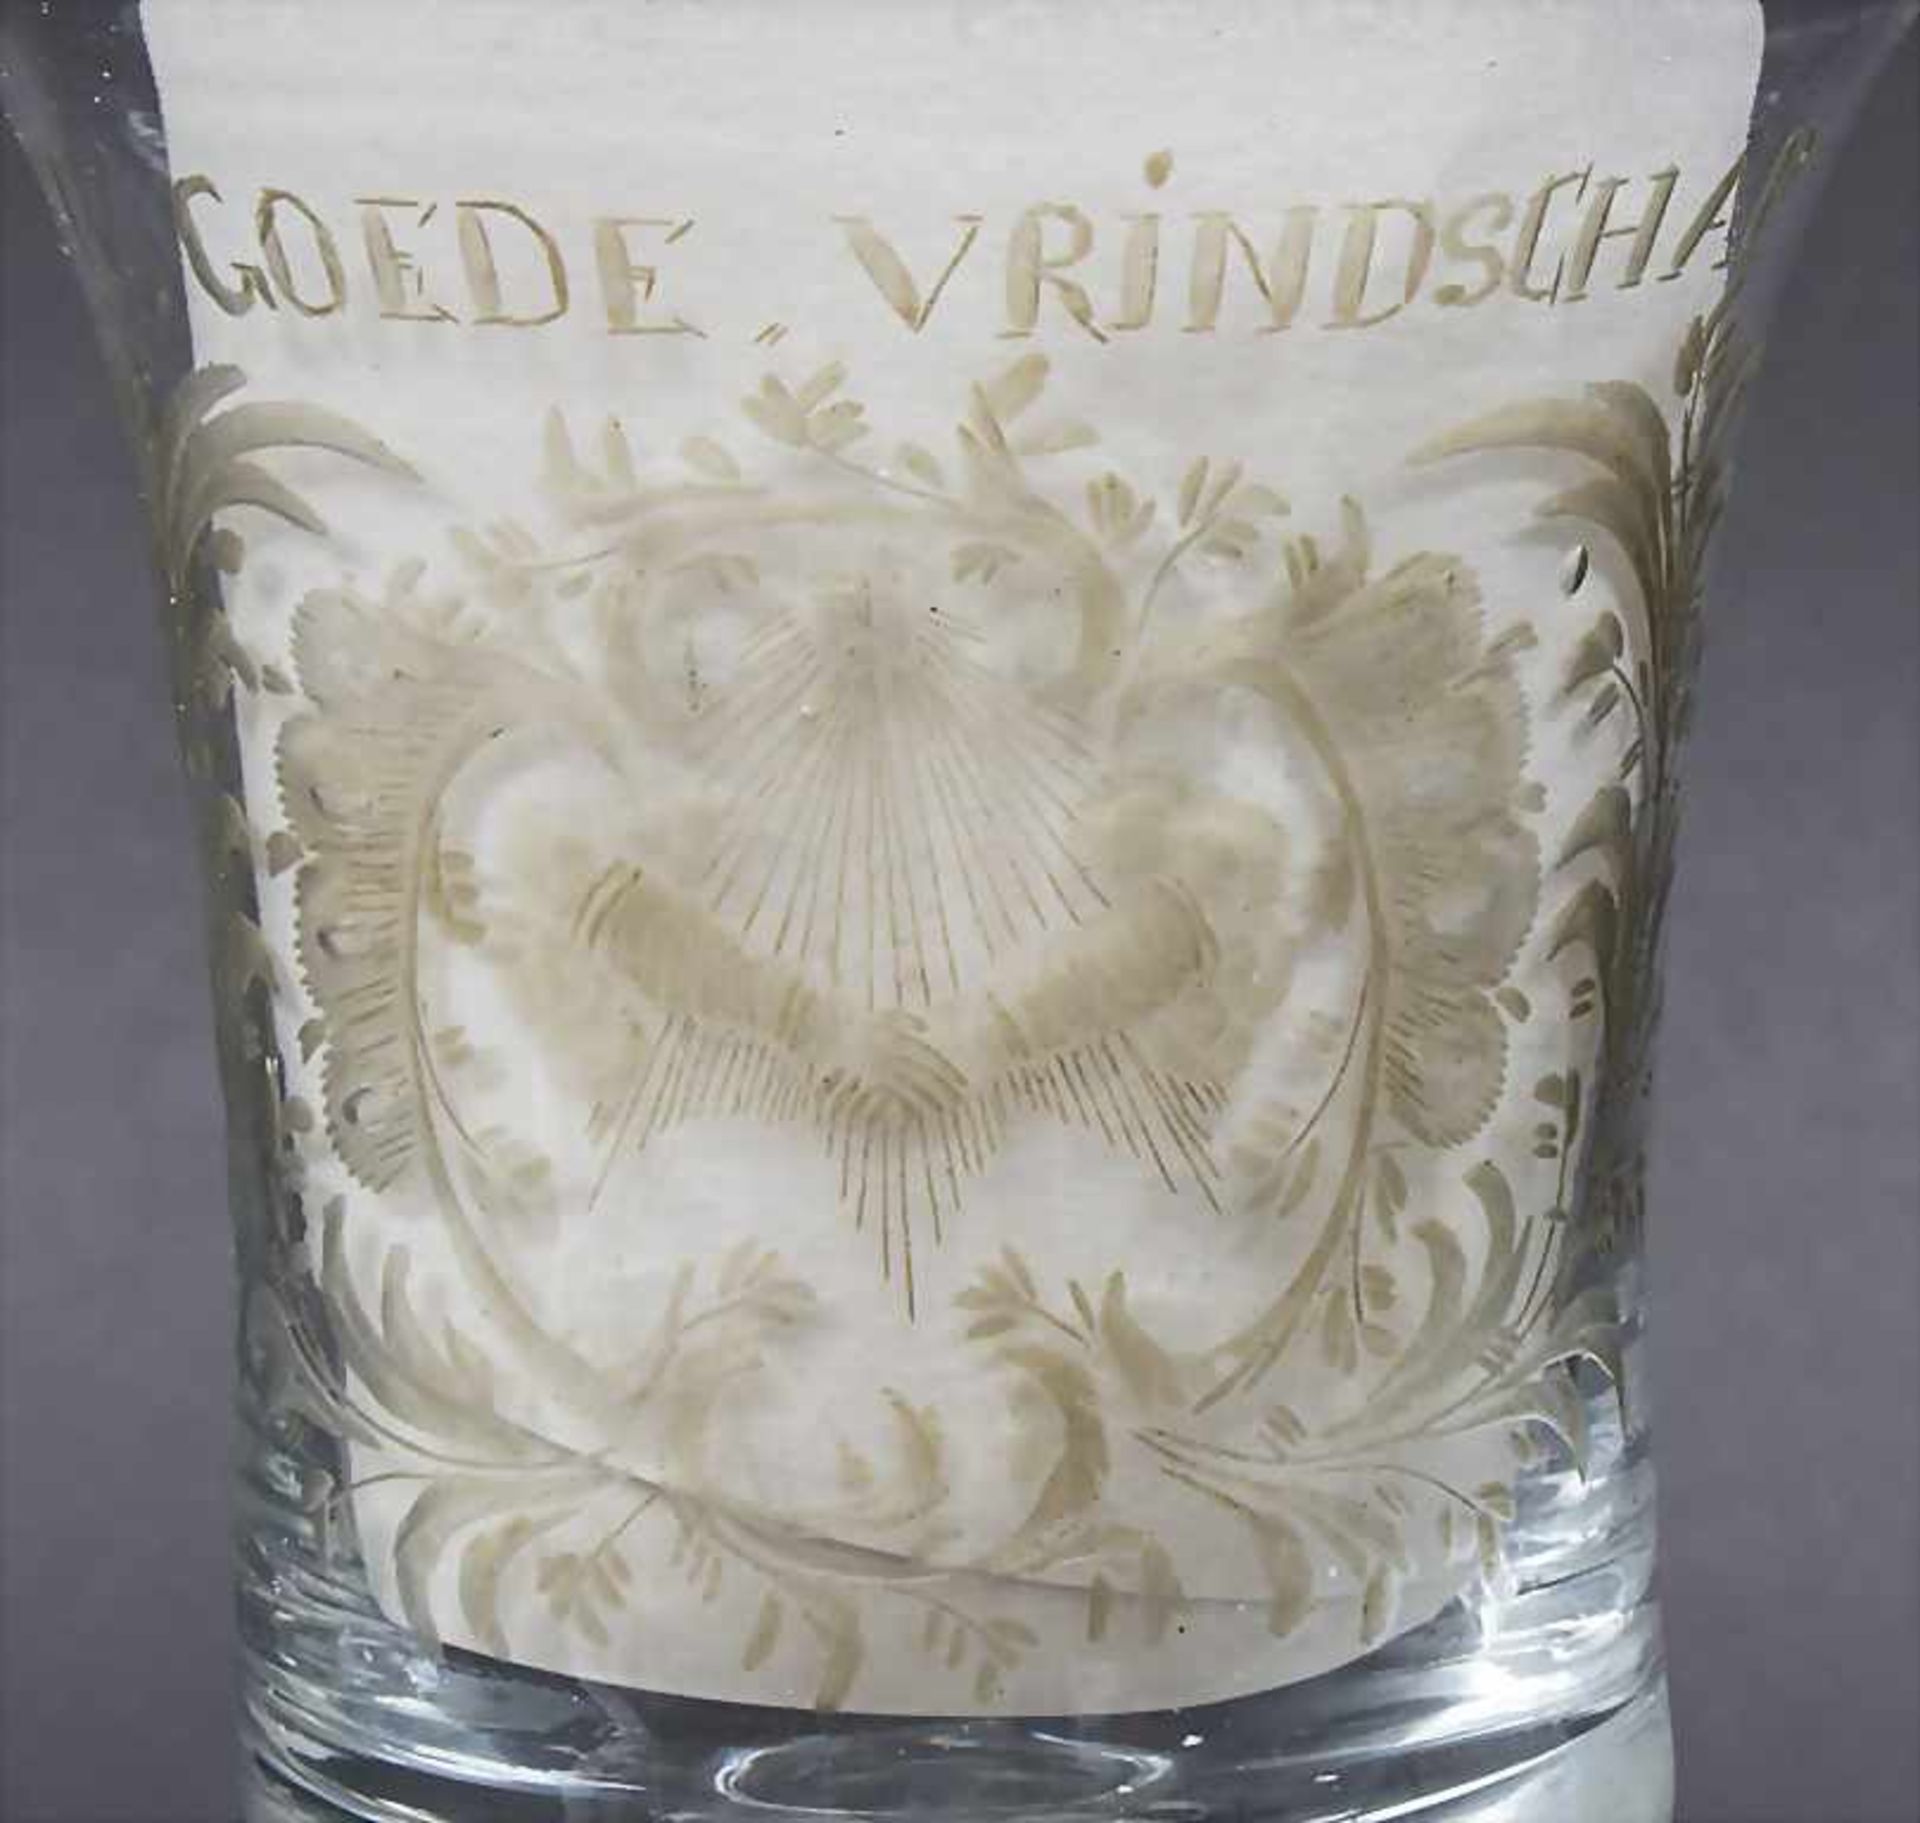 Freundschaftsglas / Noppenglas / Weinpokal / A friendship glass cup, 'DE GOEDE VRiNDSCHAP', - Image 2 of 2